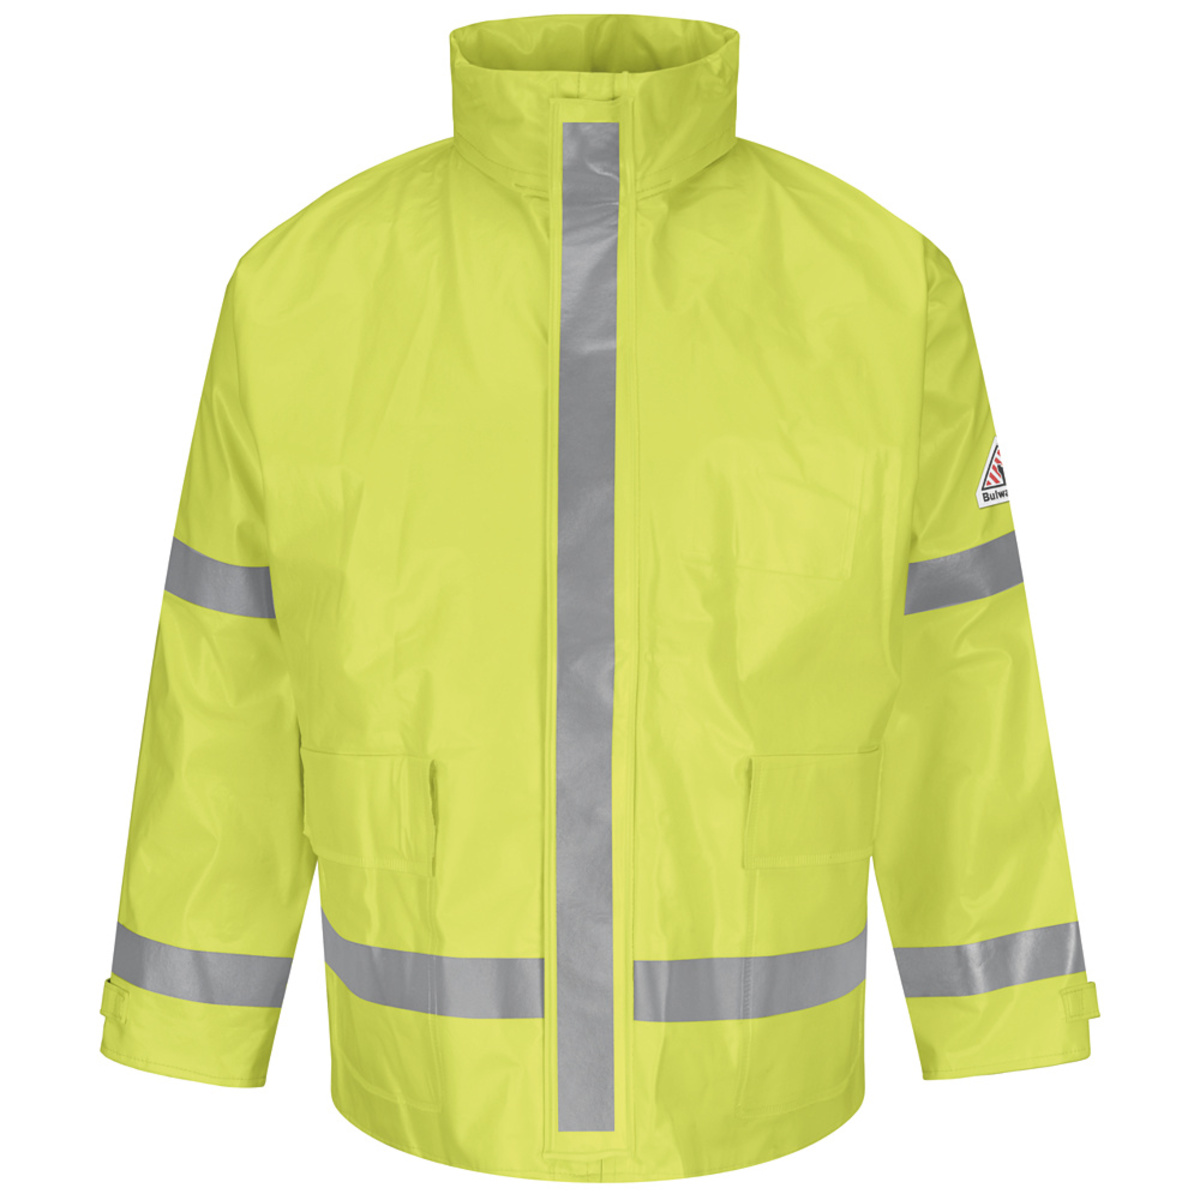 Bulwark® 4X Hi-Viz Yellow Bulwark® PVC  Modacrylic Knit Flame-Resistant Jacket